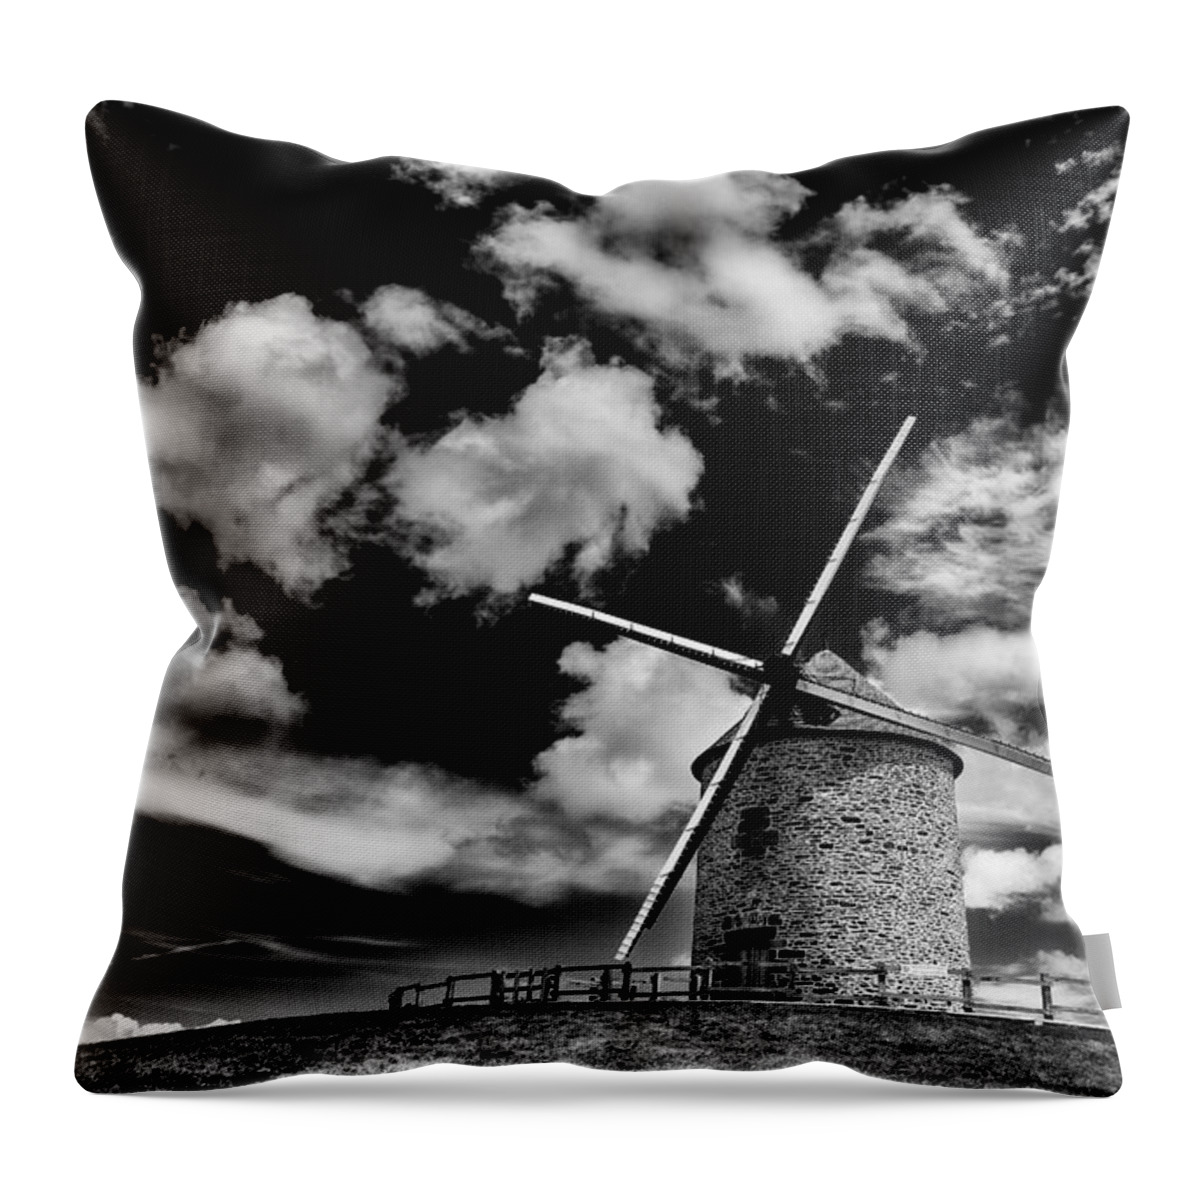 Moulin De Moidrey Throw Pillow featuring the photograph Moulin de Moidrey Deux by Nigel R Bell